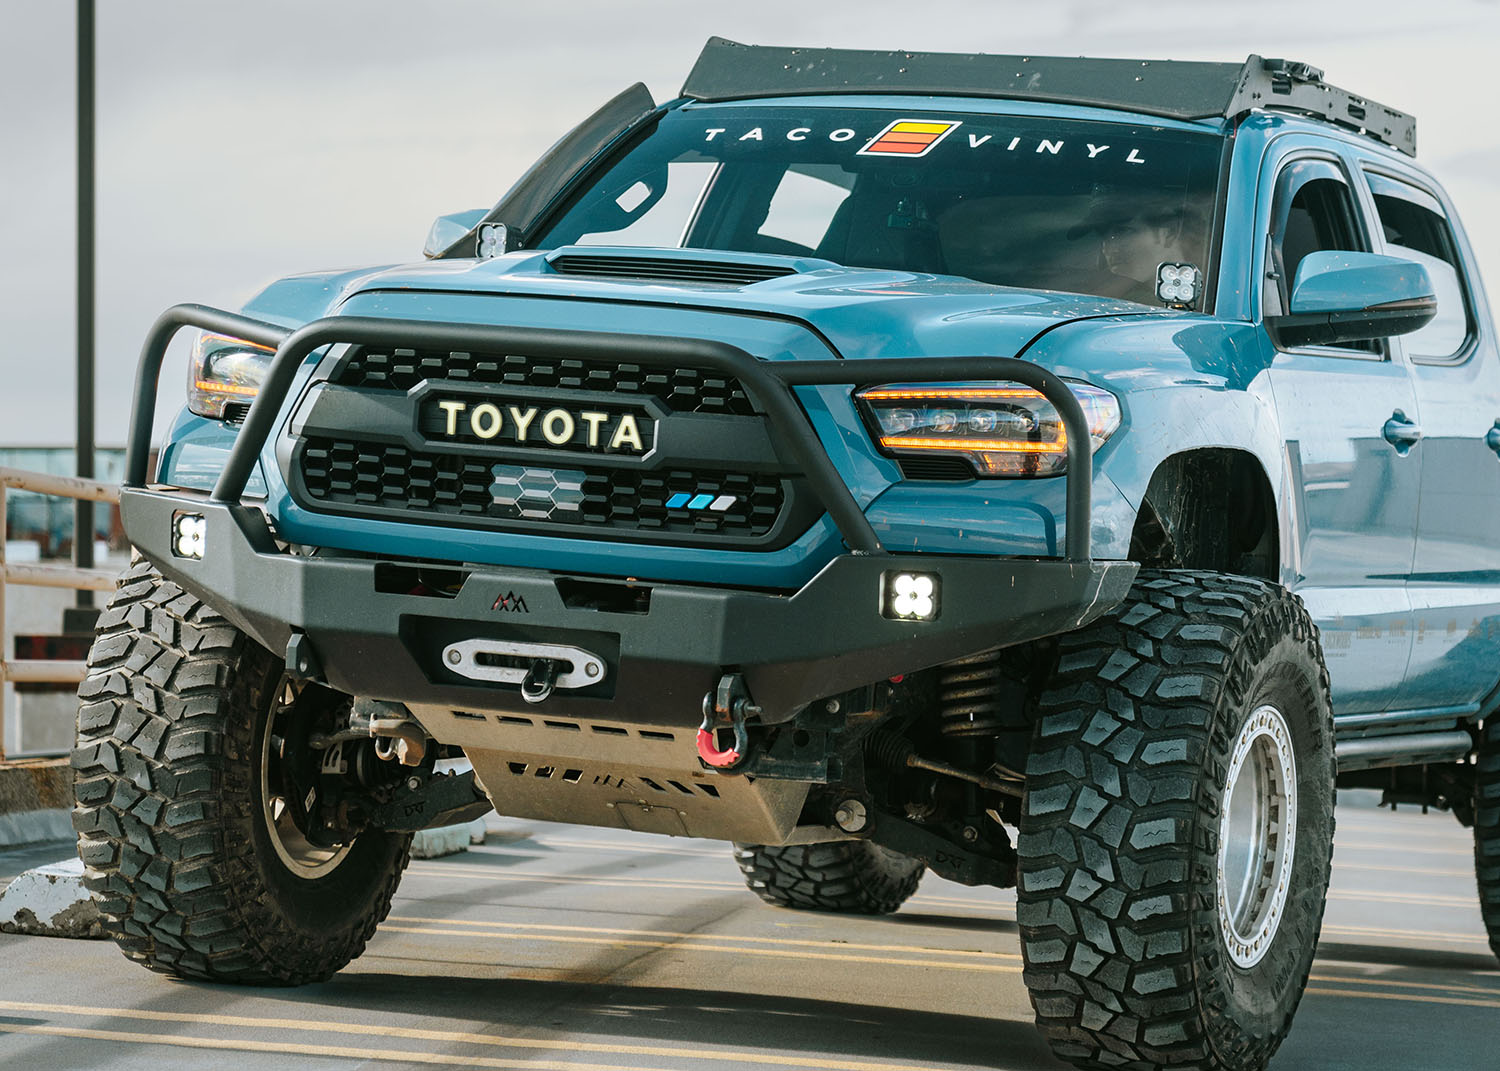 Toyota Tacoma Ultimate Bundle Deal